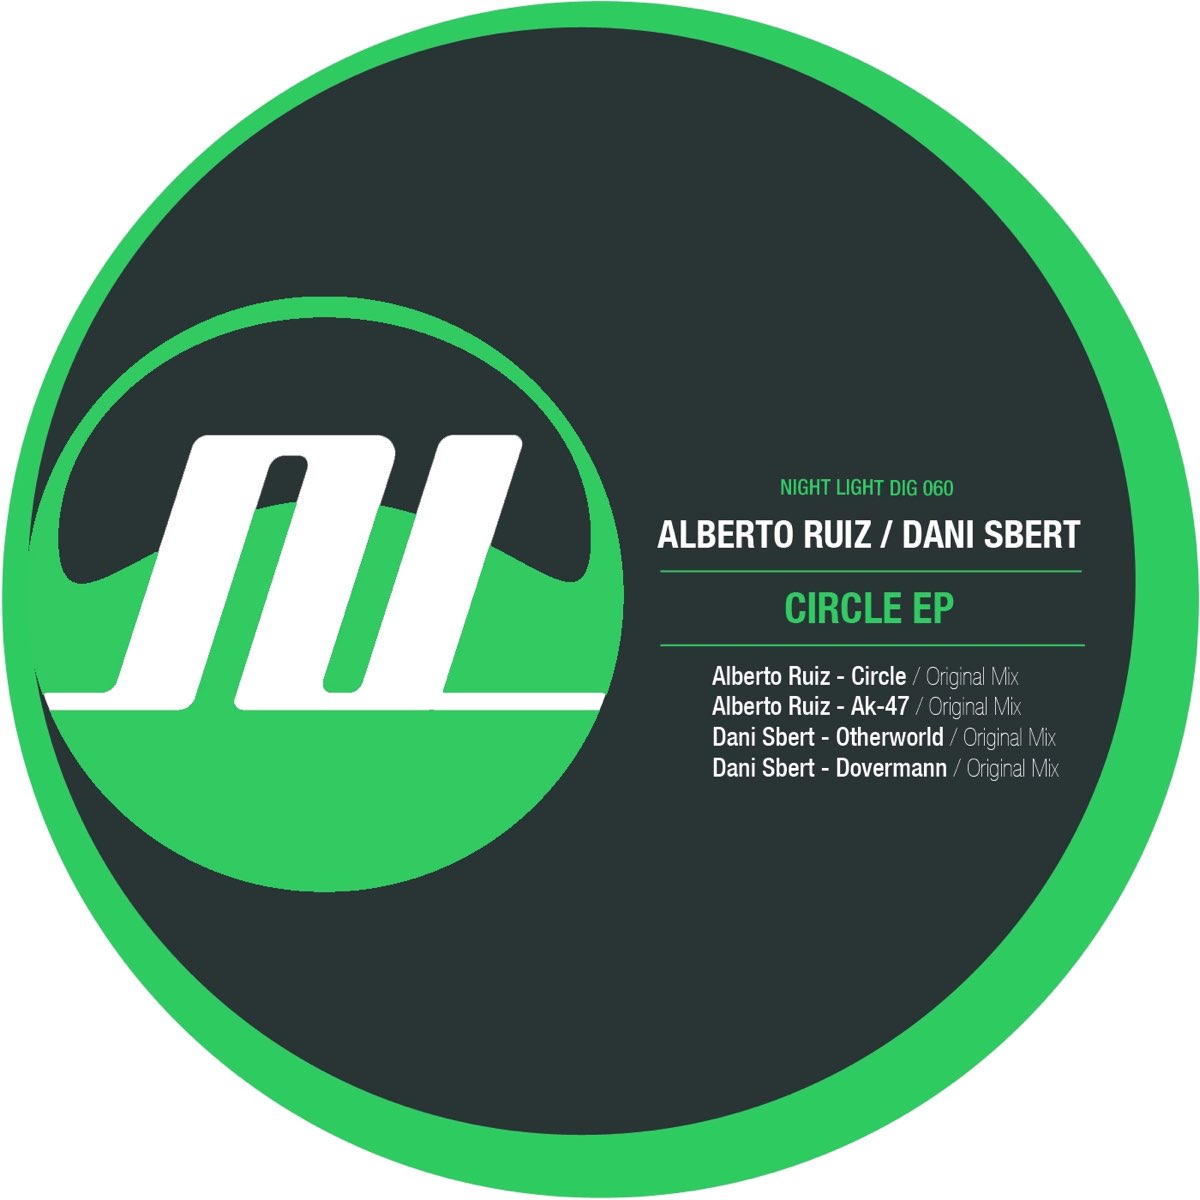 Alberto Ruiz line Mass. Dani Sbert resolved problem (Original Mix). Alberto Ruiz Chesterfield Original Mix // Numen. SBERTIME. Sbert